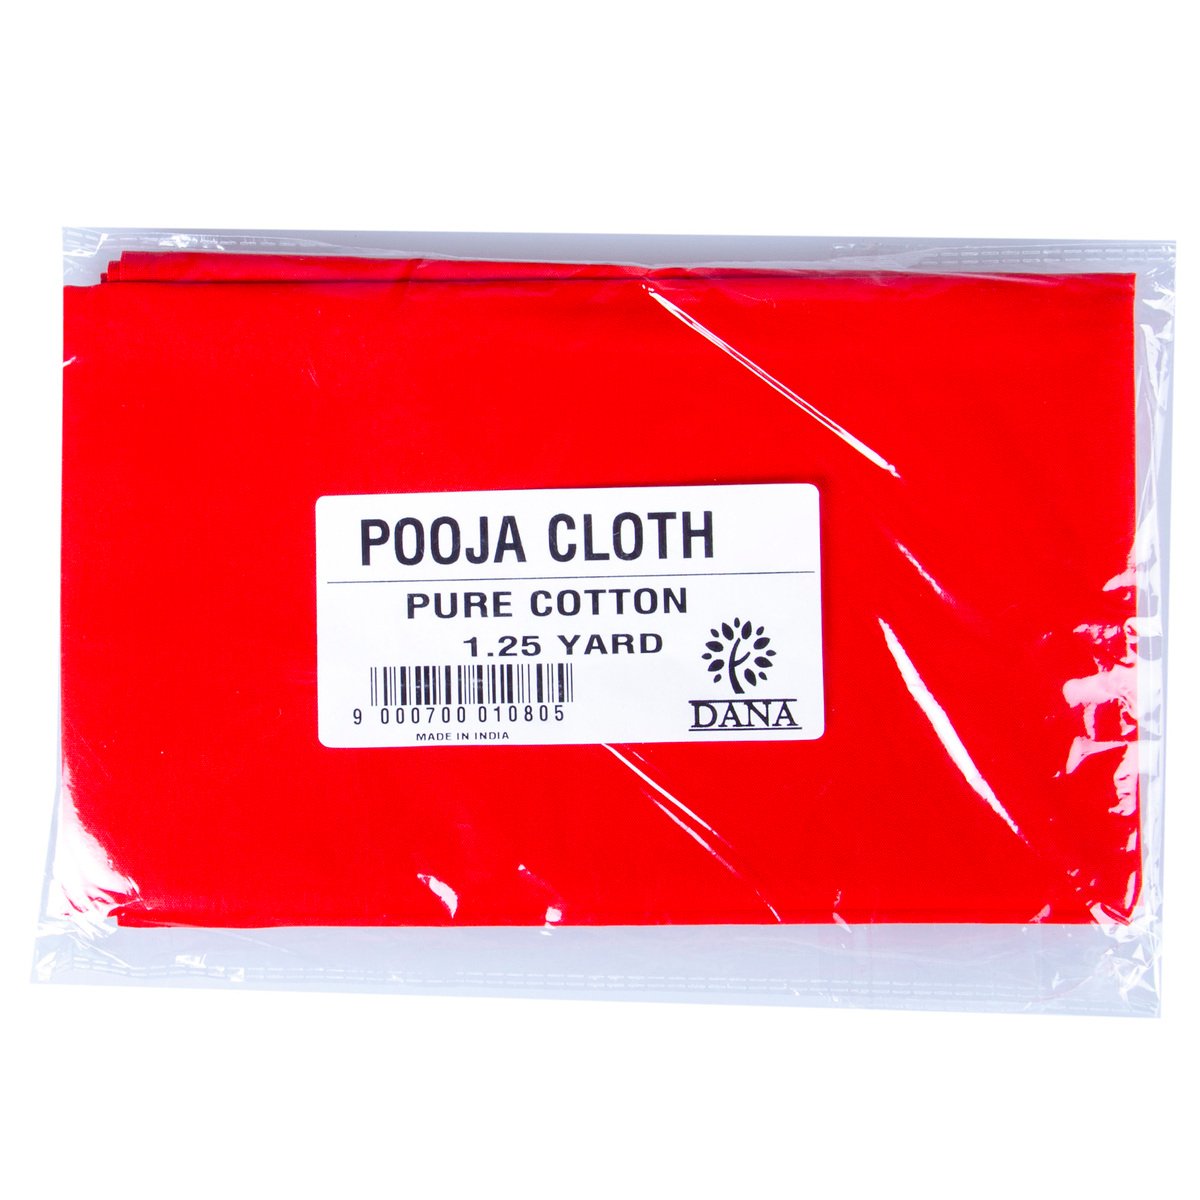 Madhoor Pooja Cloth 1pc